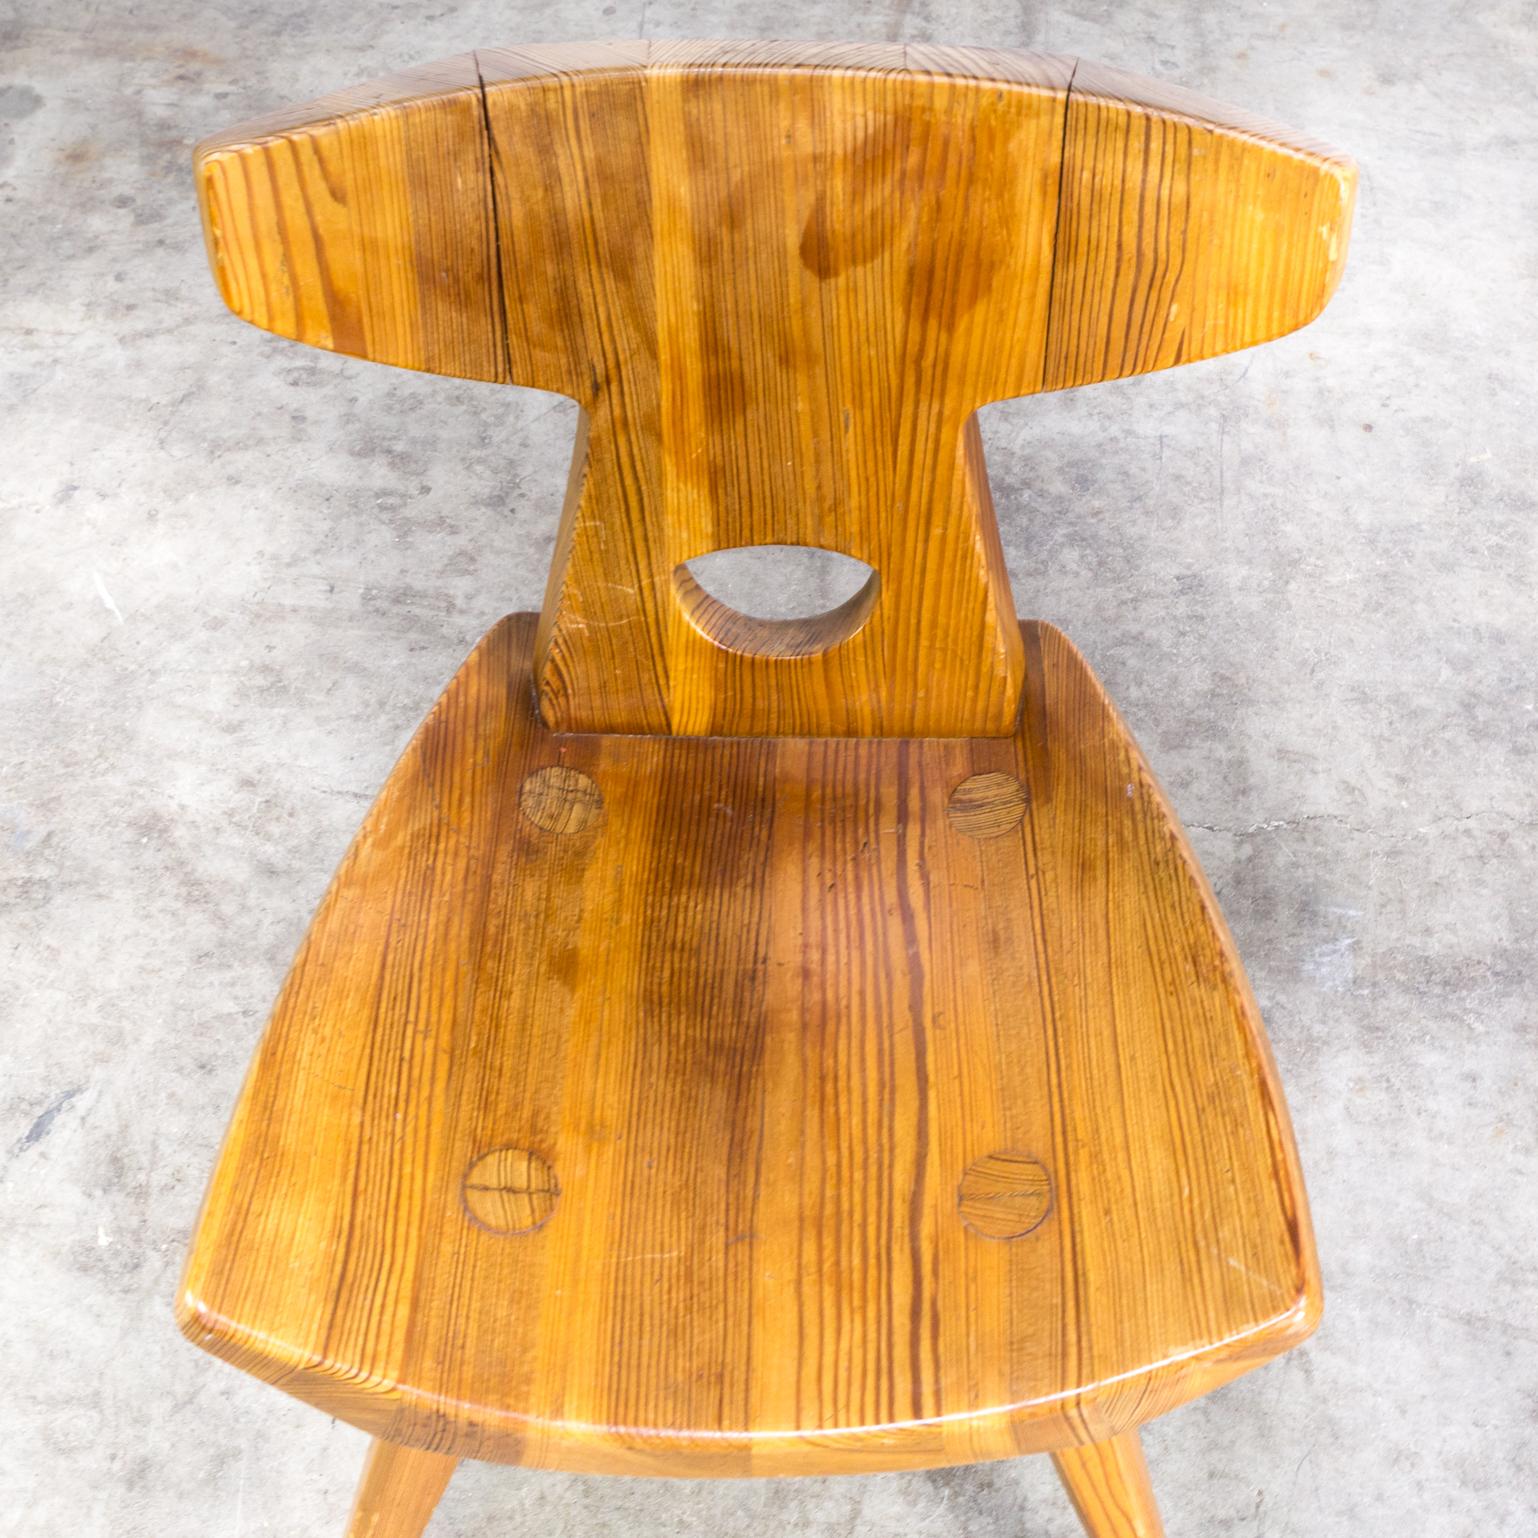 1960s Jacob Kielland-Brandt Dining Chairs for I. Christiansen Set of 2 5